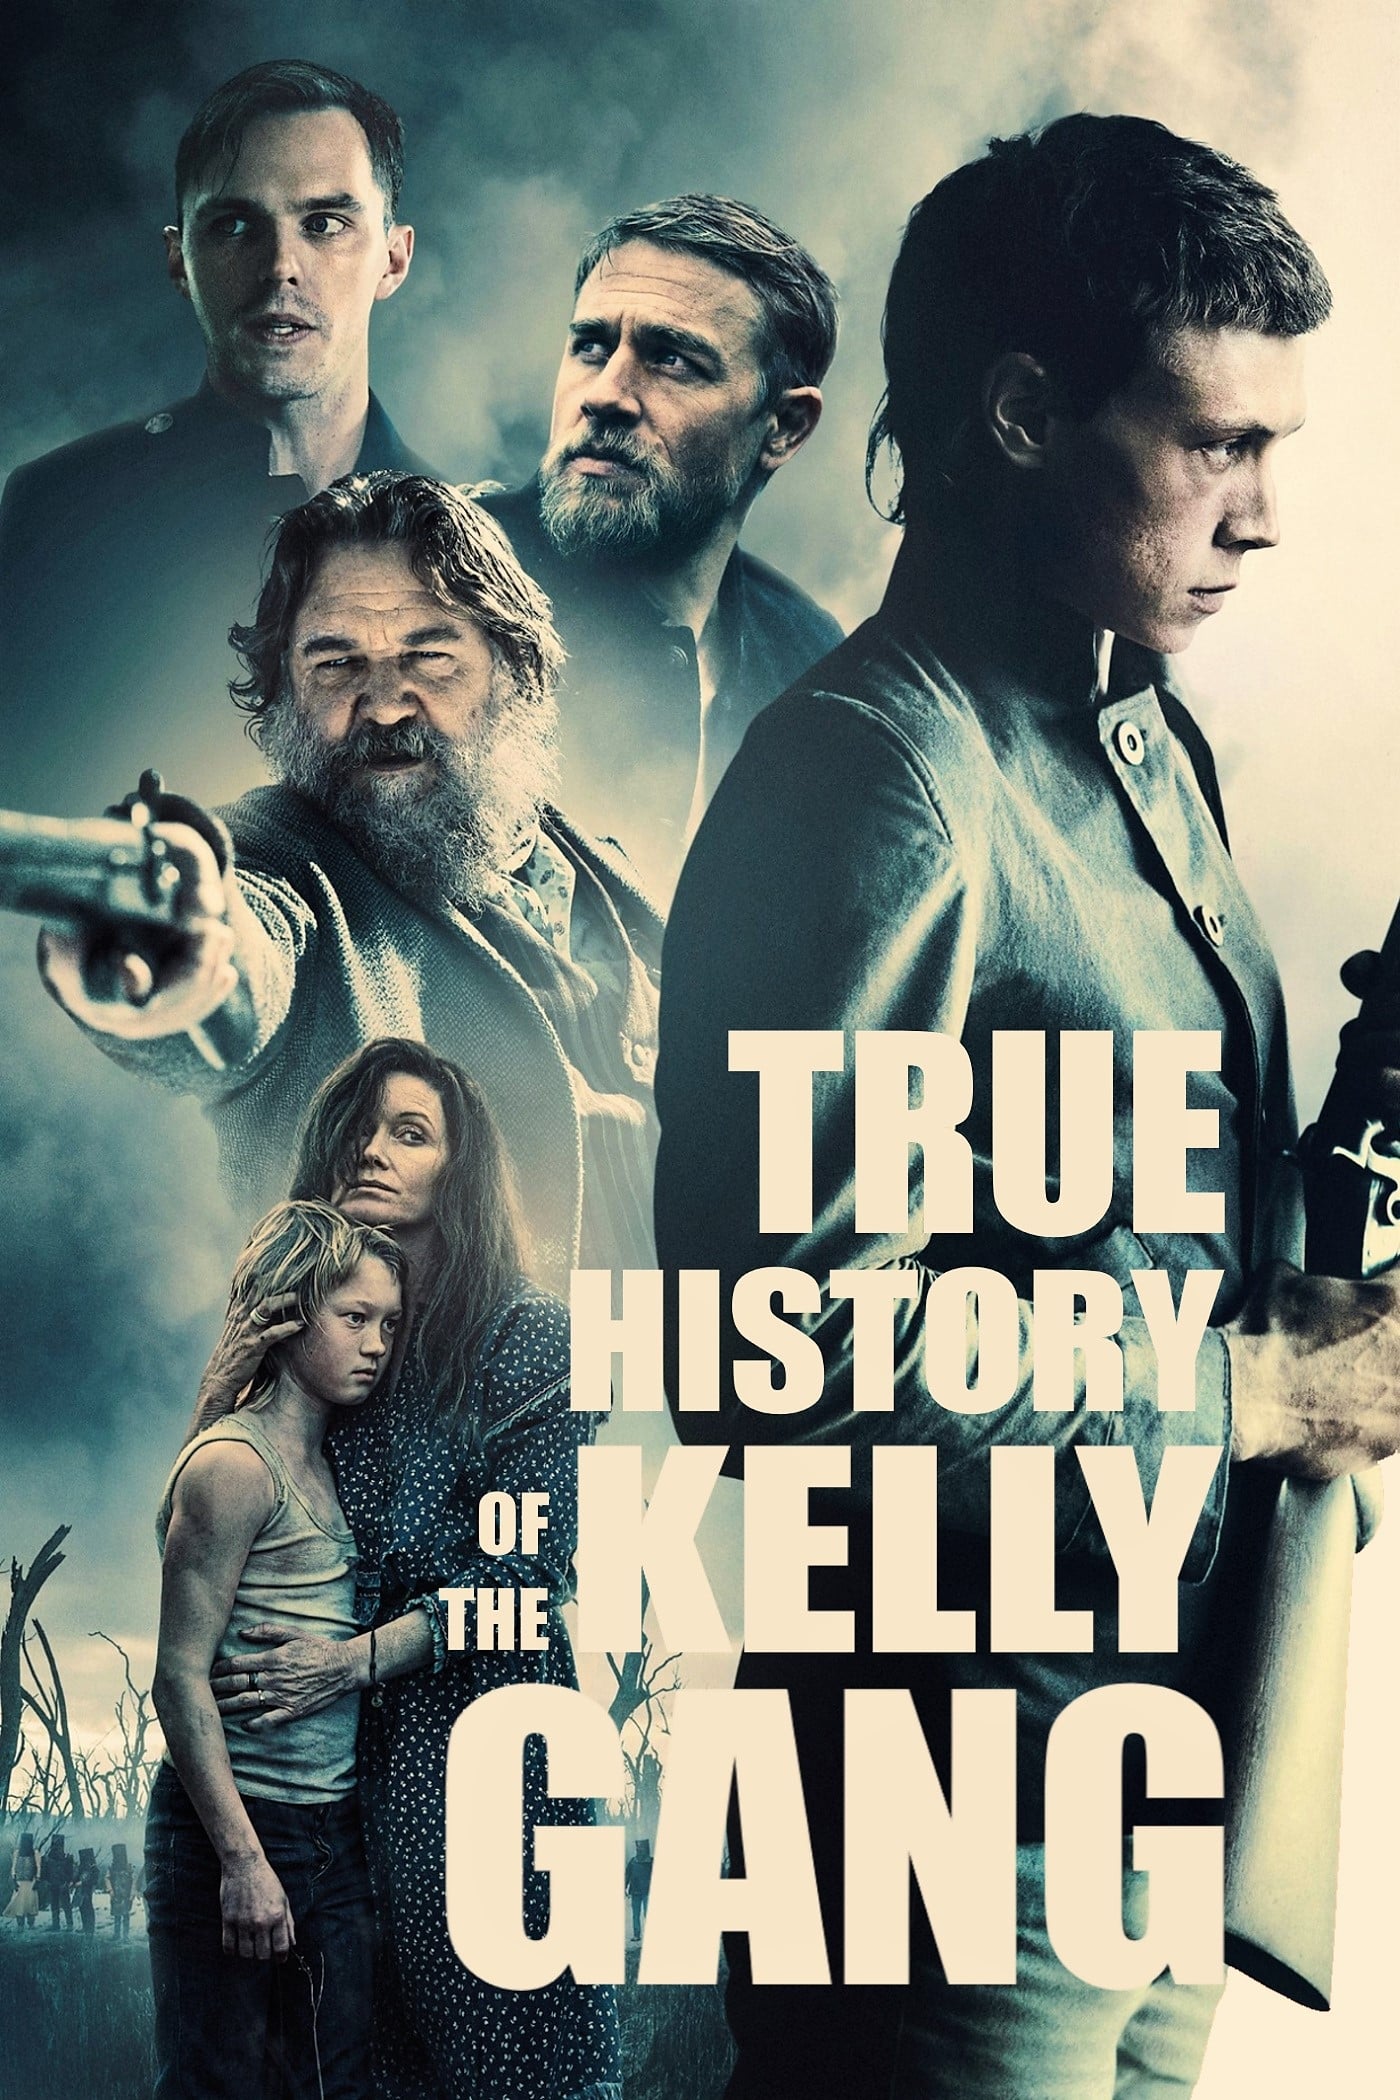 La verdadera historia de la banda de Kelly (2019) PLACEBO Full HD 1080p Latino